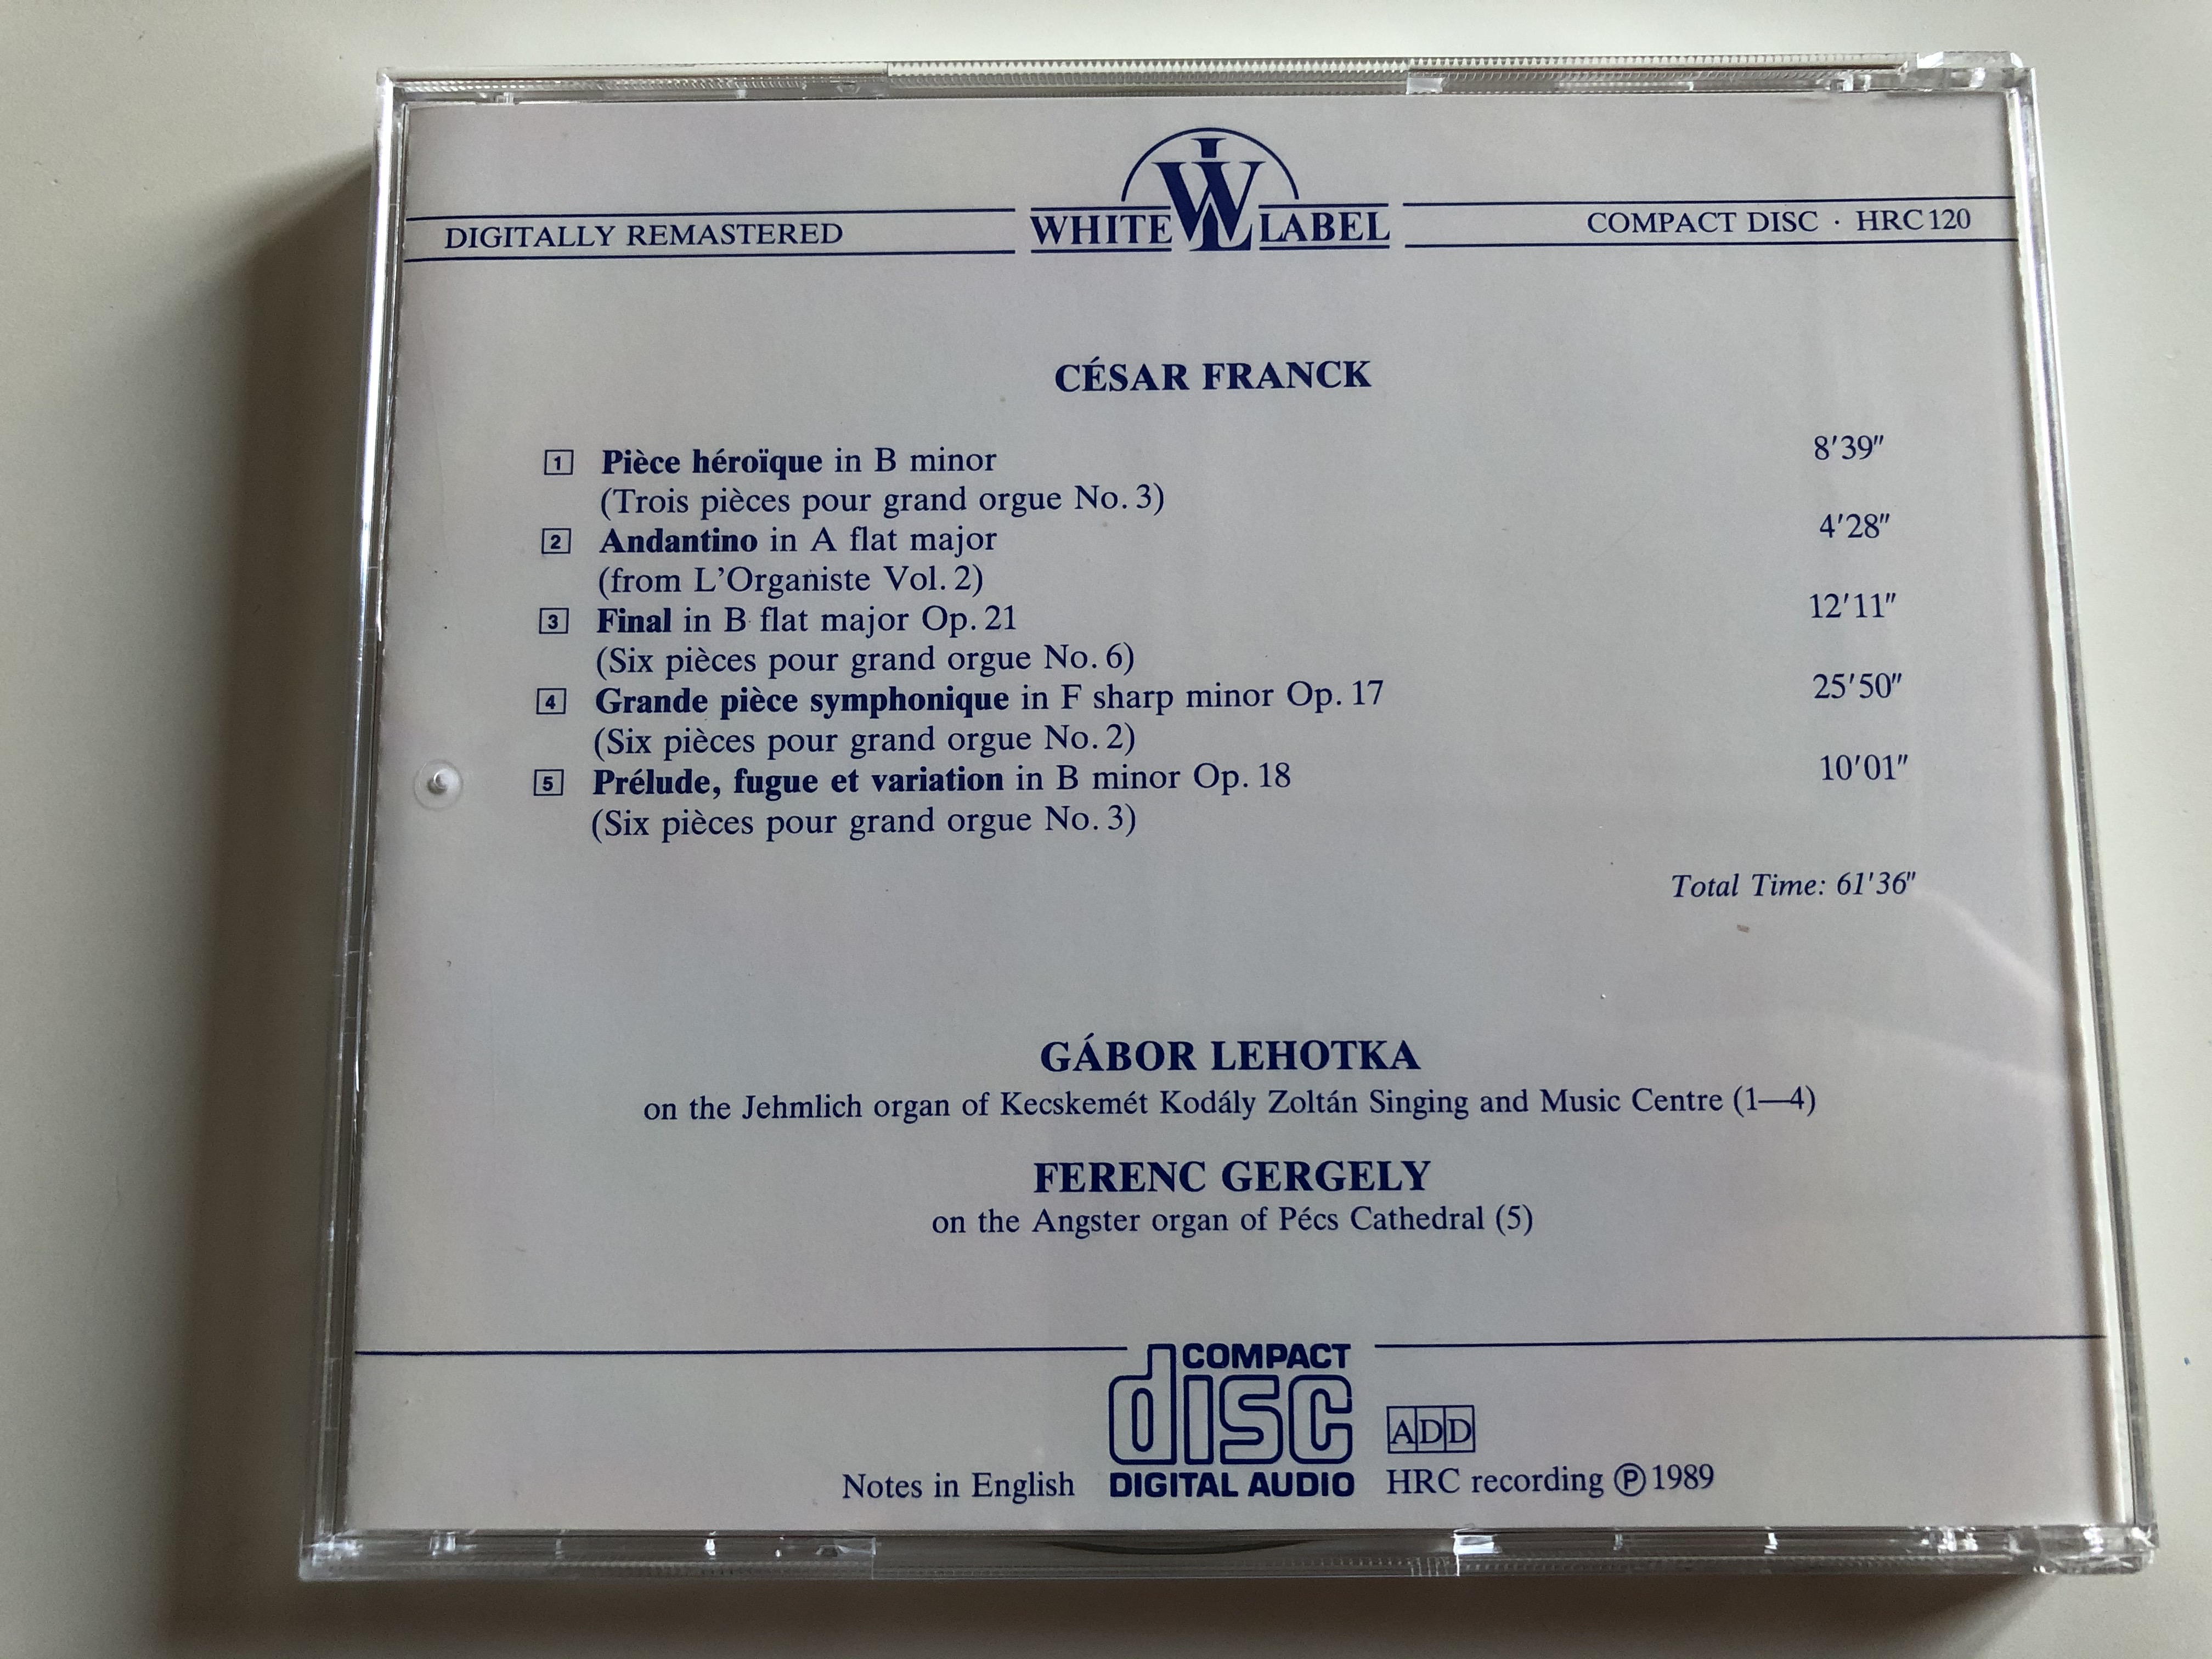 c-sar-frank-organ-works-g-bor-lehotka-ferenc-gergely-hungaroton-audio-cd-1995-stereo-hrc-120-6-.jpg